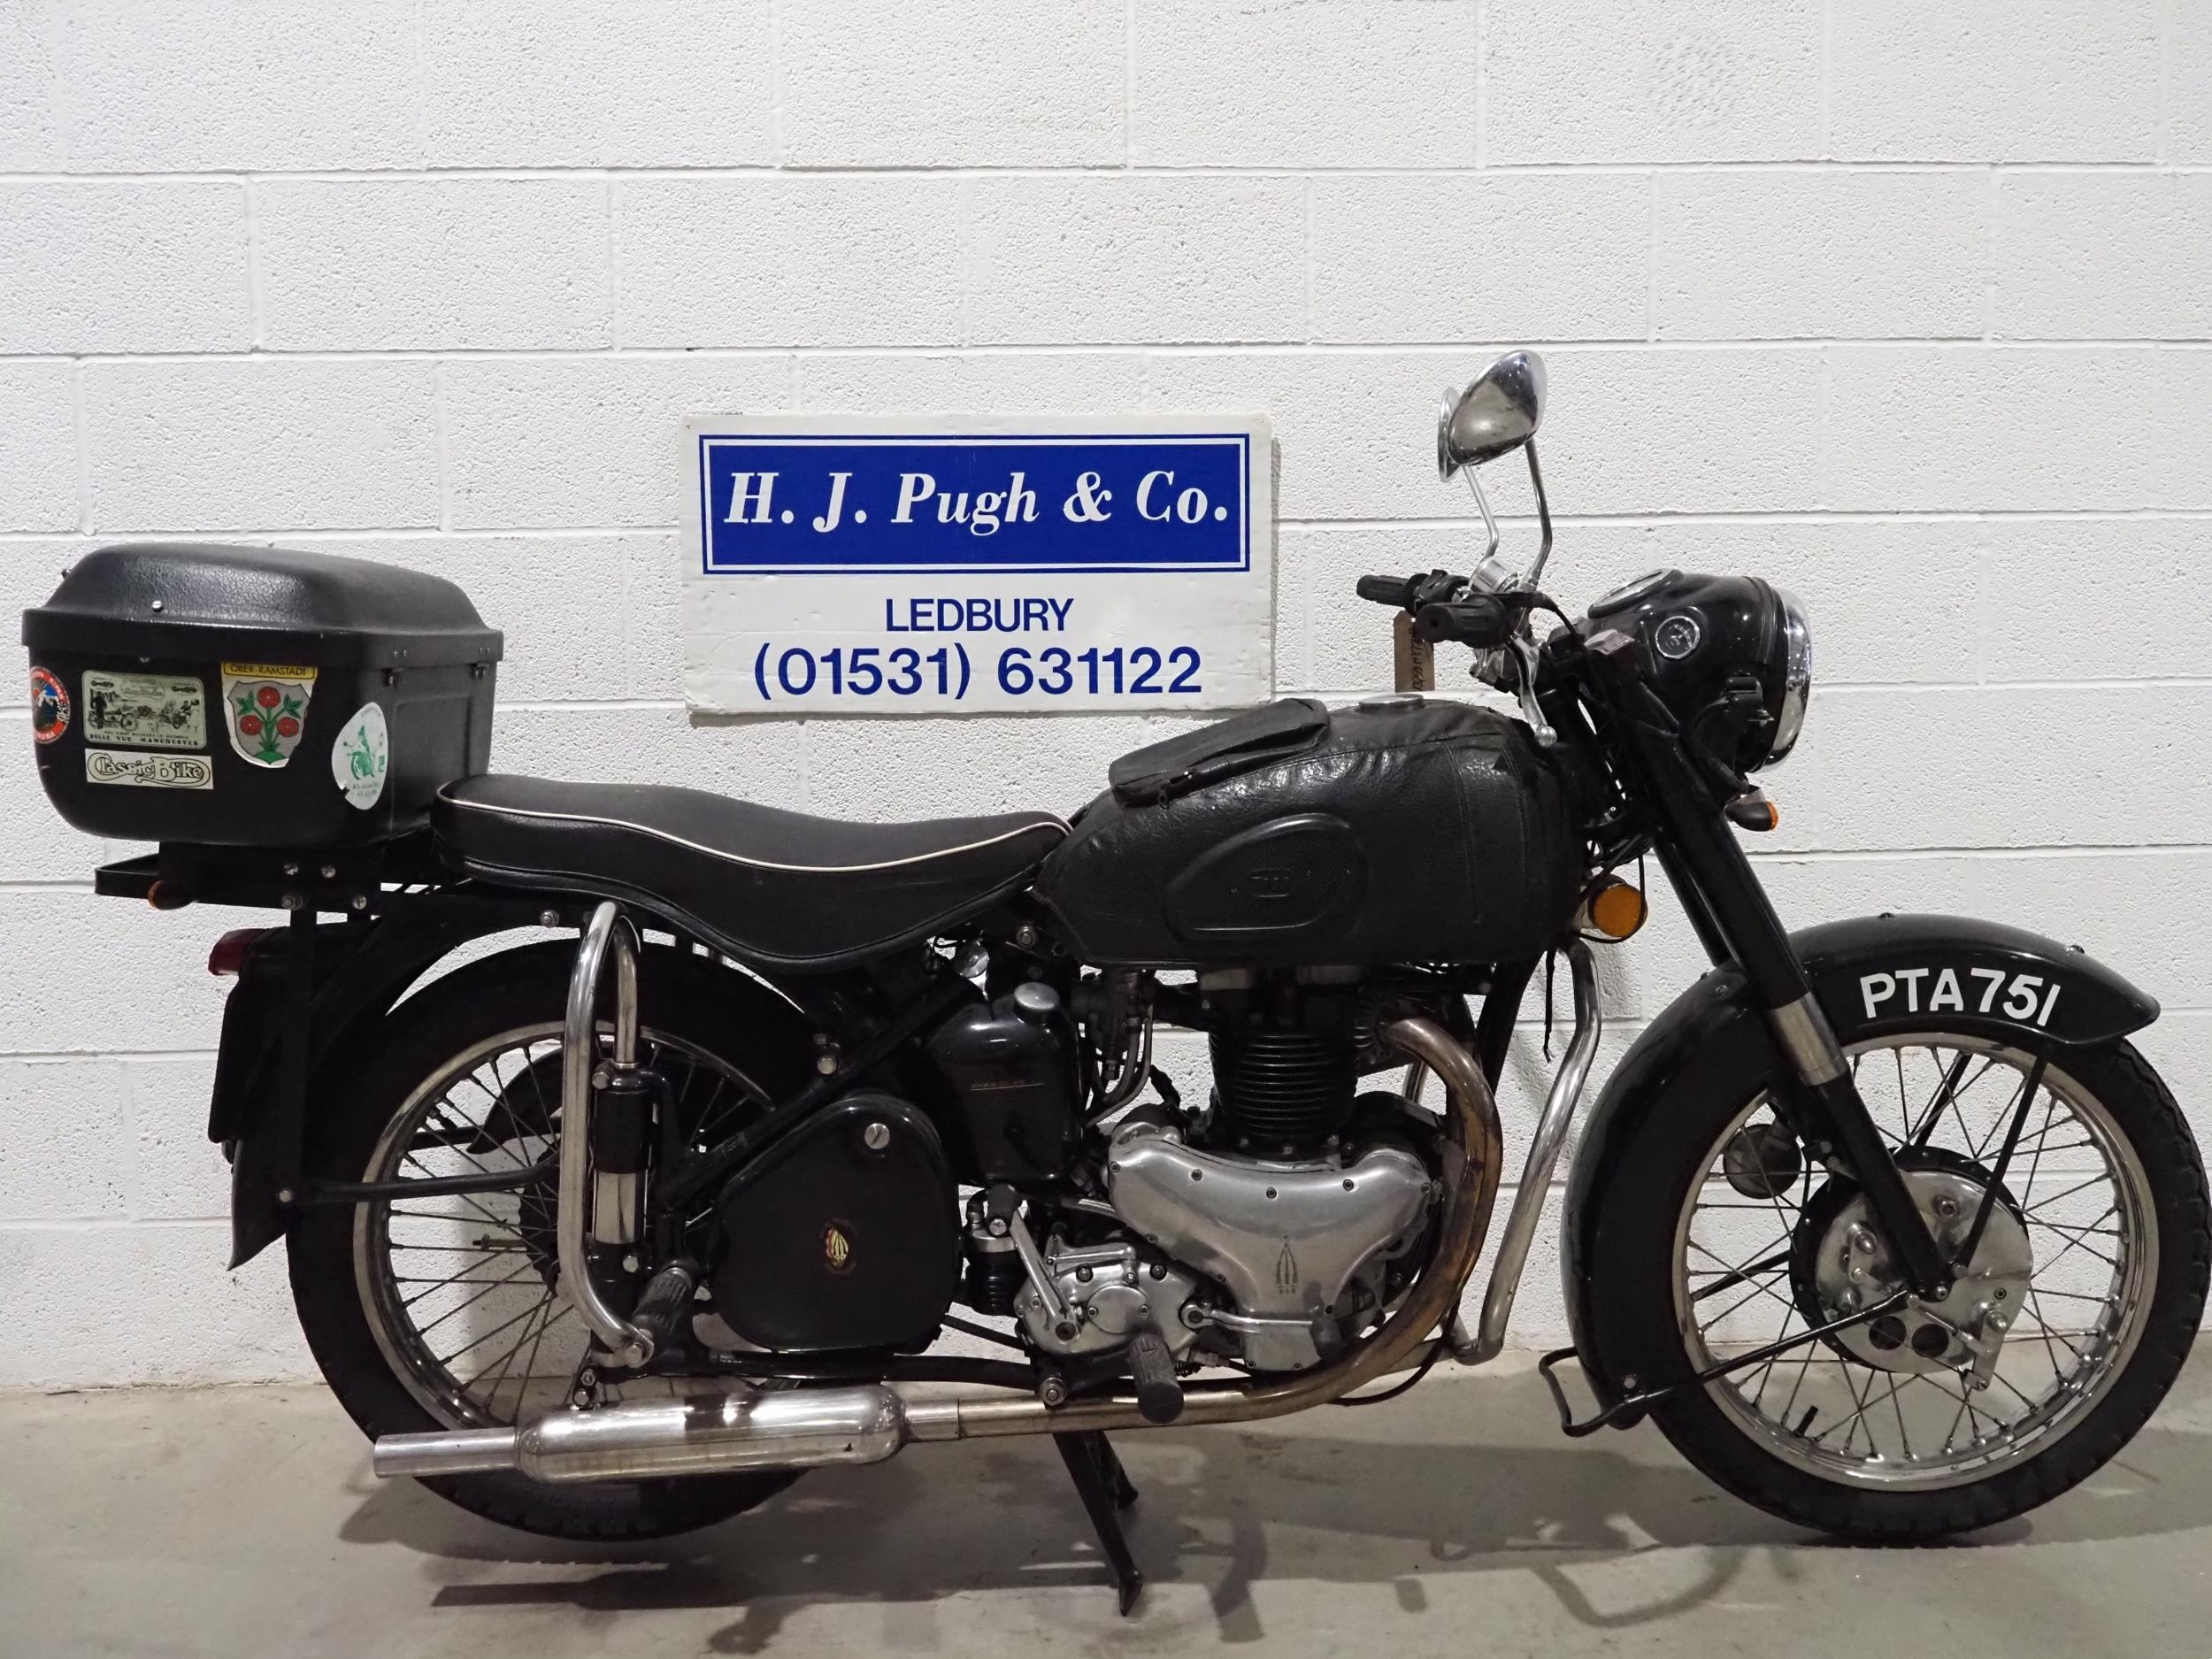 BSA A10 motorcycle. 1953. 648cc Frame No. BA7510698 Engine No. BA10 14766 - doesn't match V5